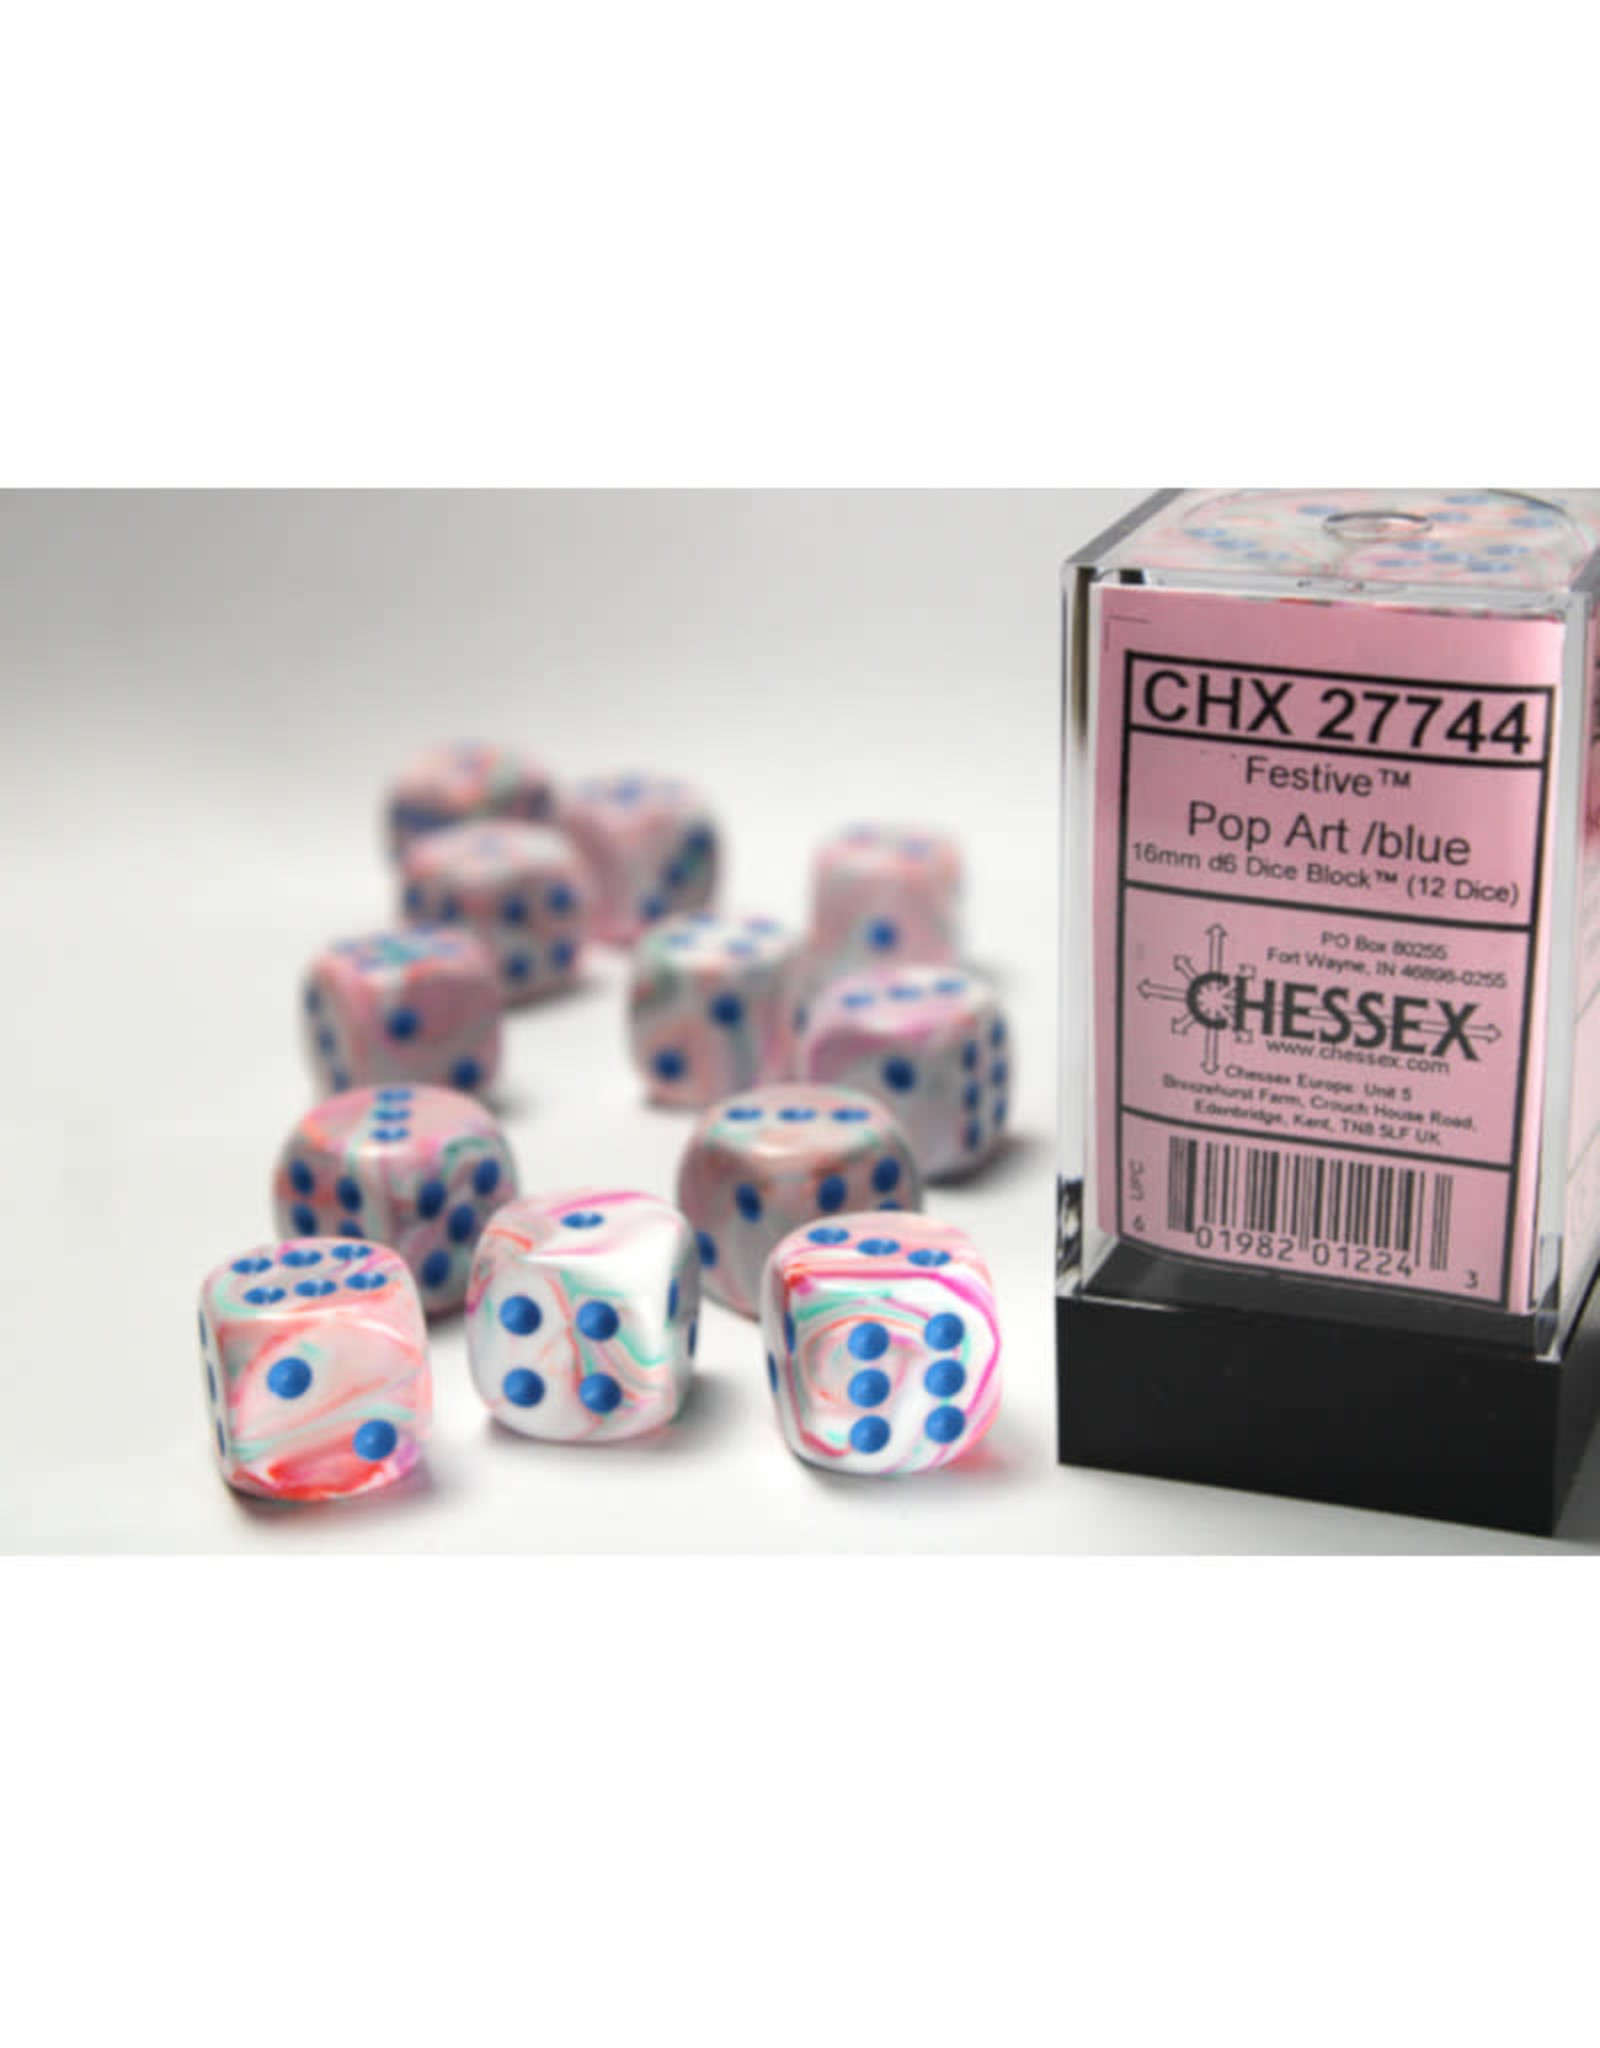 Chessex D6 Dice: 16mm Menagerie Festive Pop Art/Blue (12)